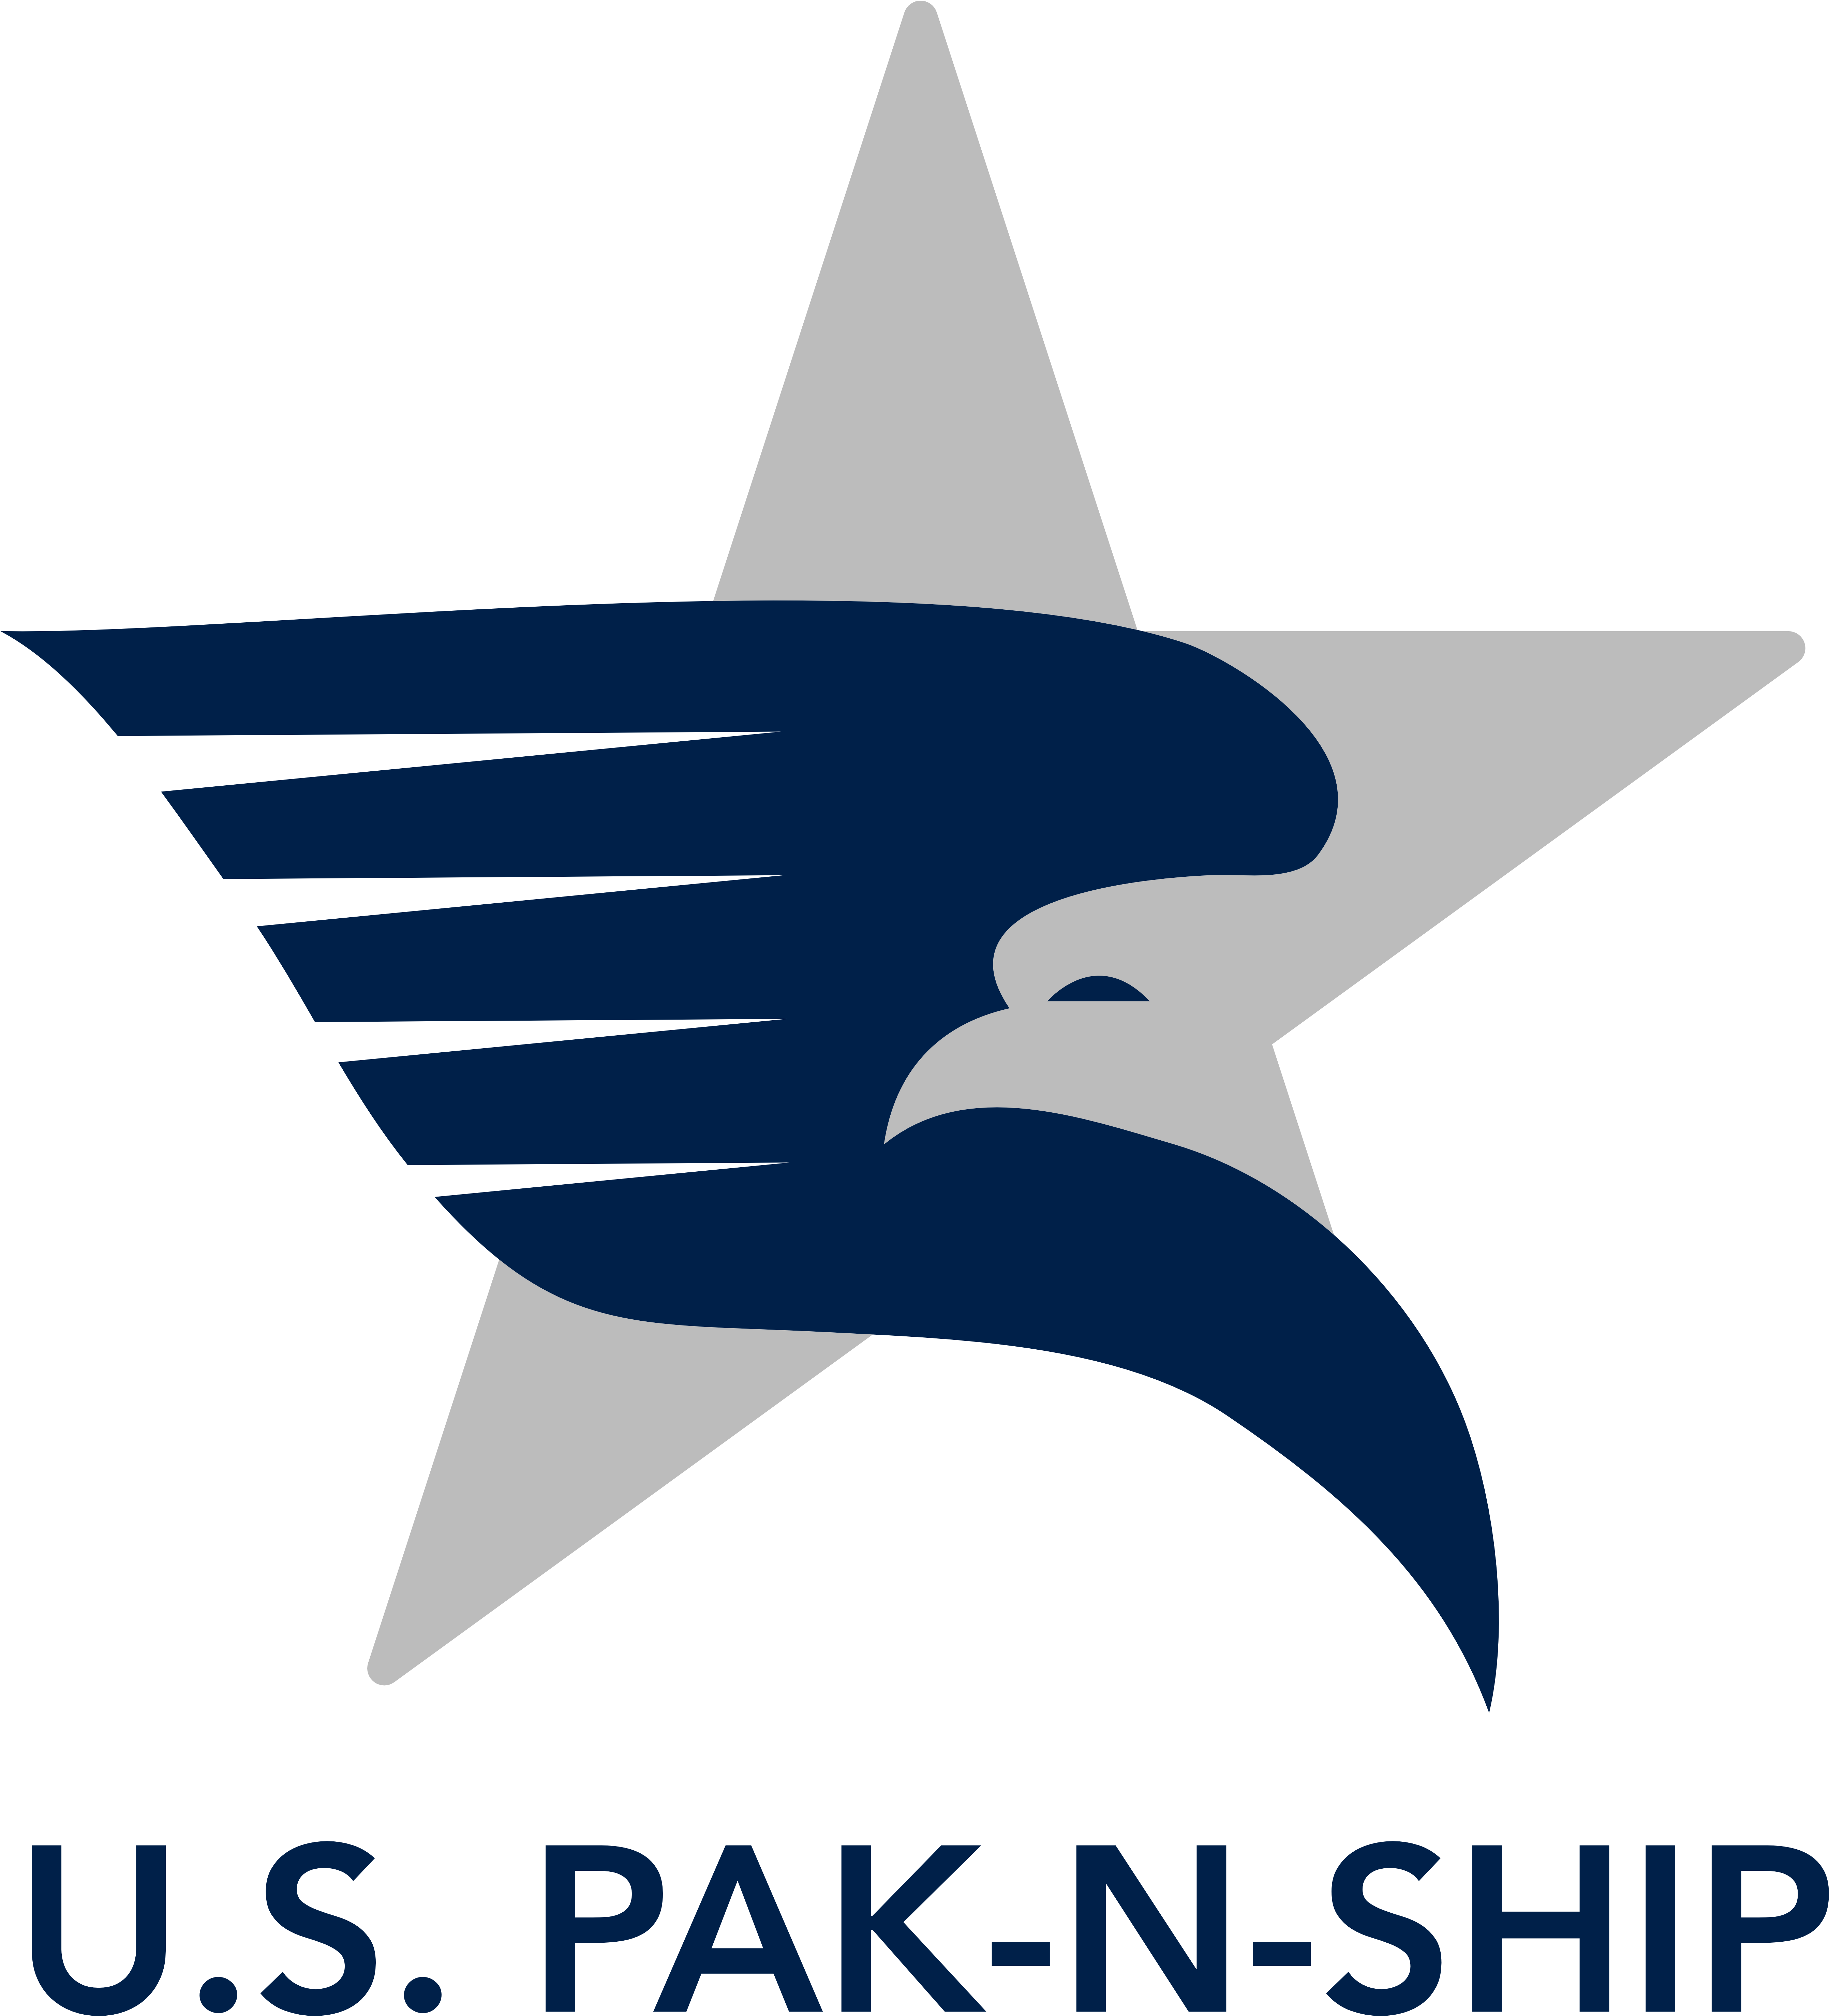 Pak N Ship - Graphic Design (5580x6048)